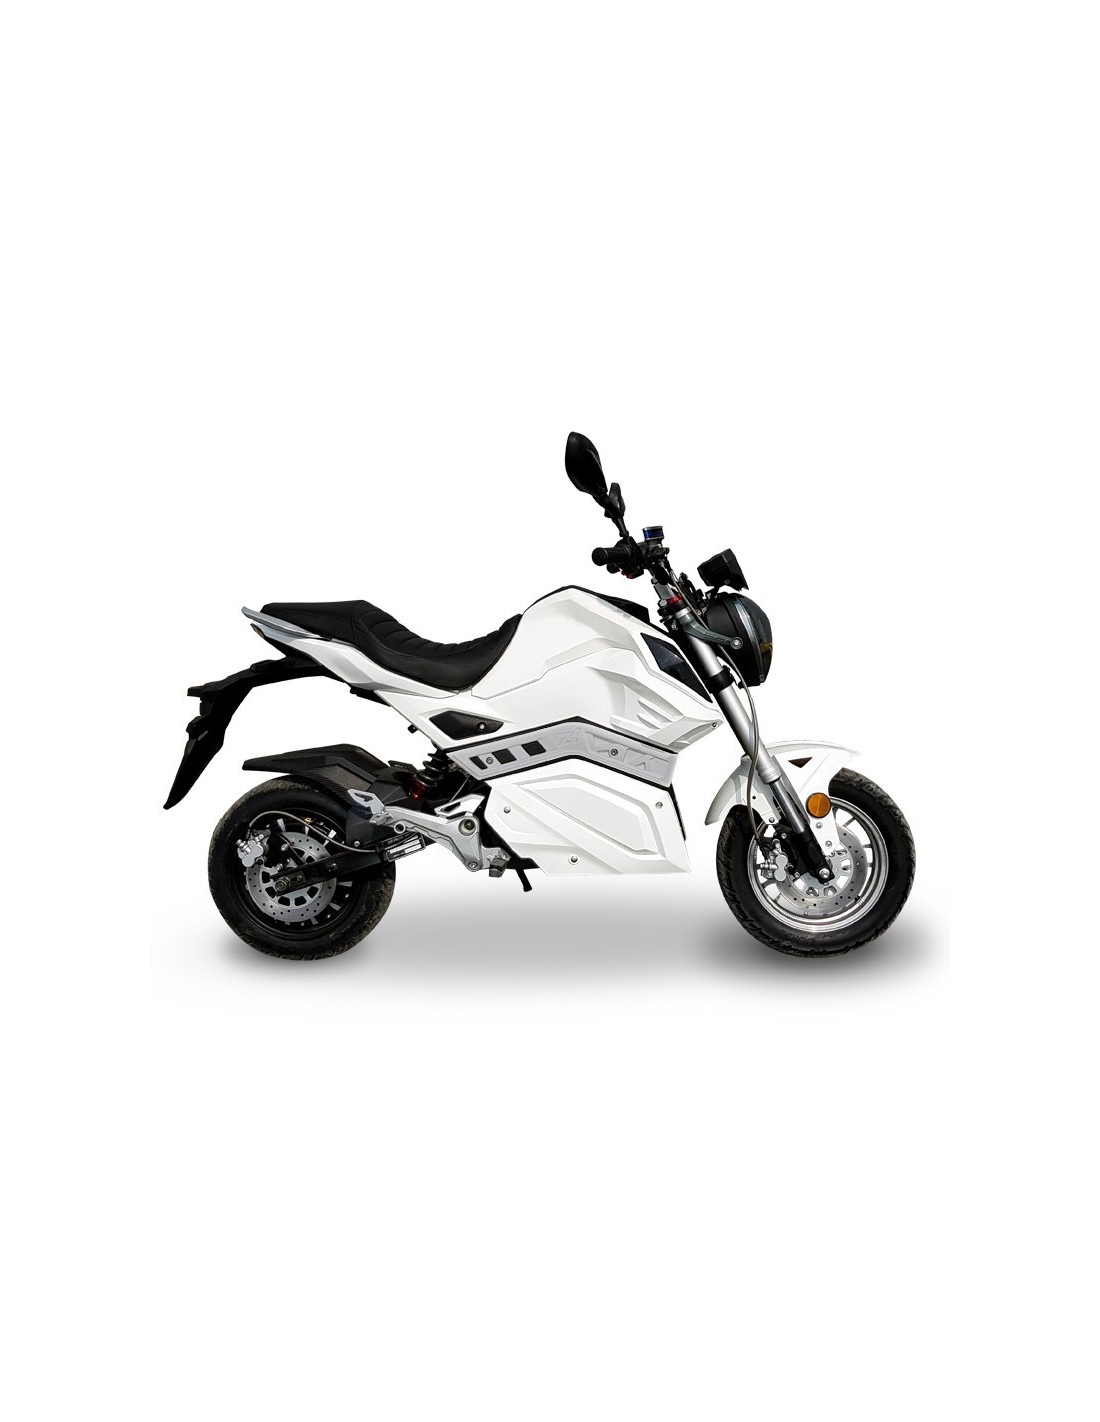 Moto électrique 125cc Maccha Flash (Version 5000W ou 8000 Watts